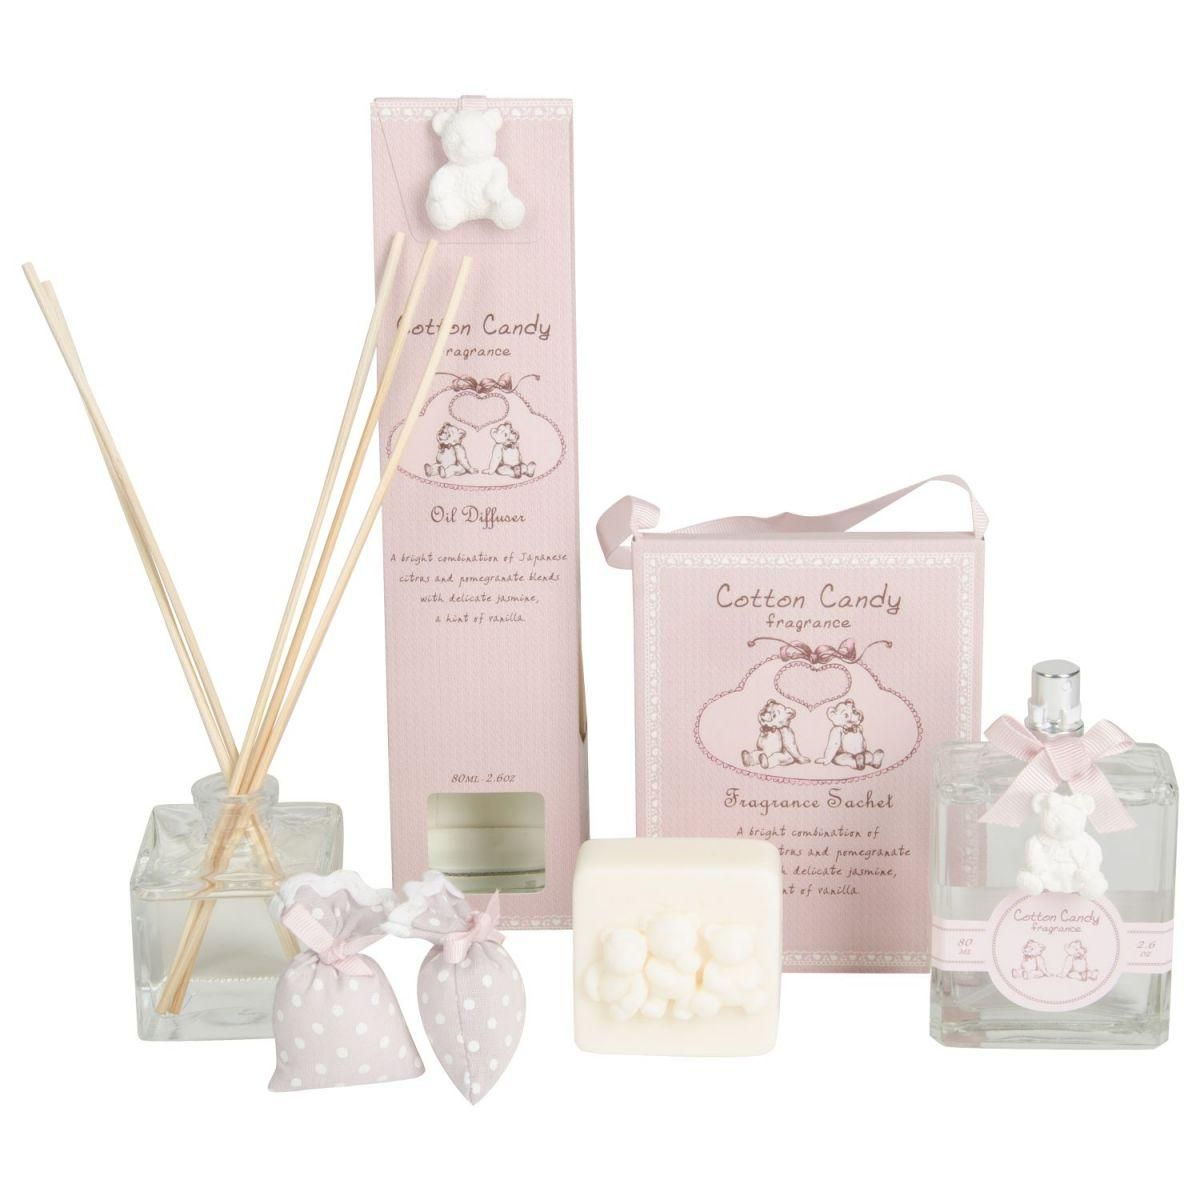 cotton candy linen sachet9 in giftbox de luxe pink